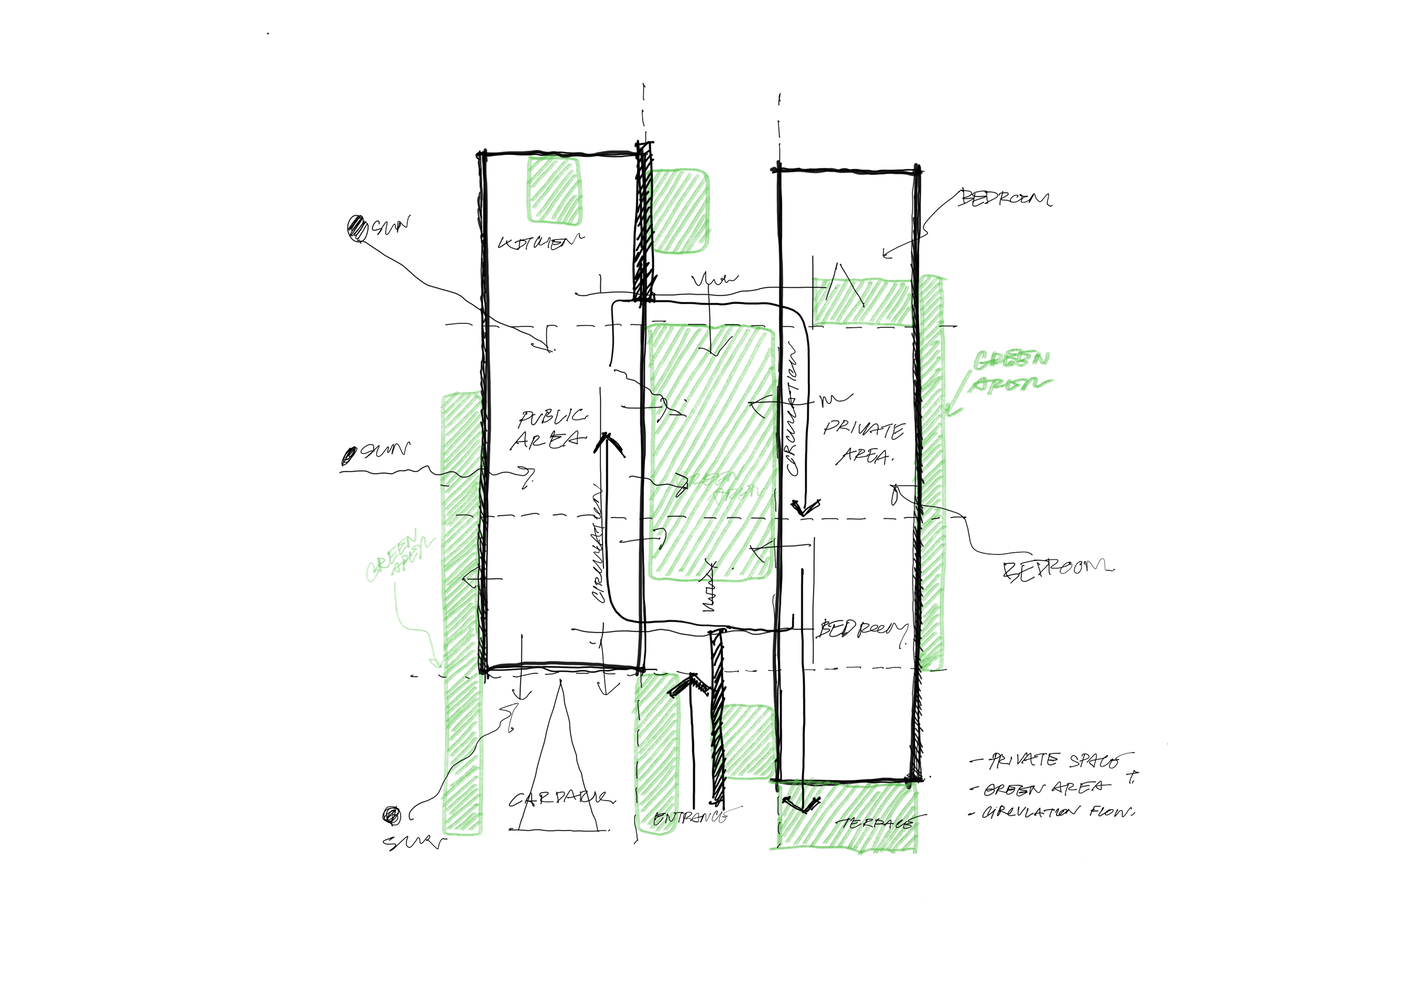 Plan diagram of a house. 